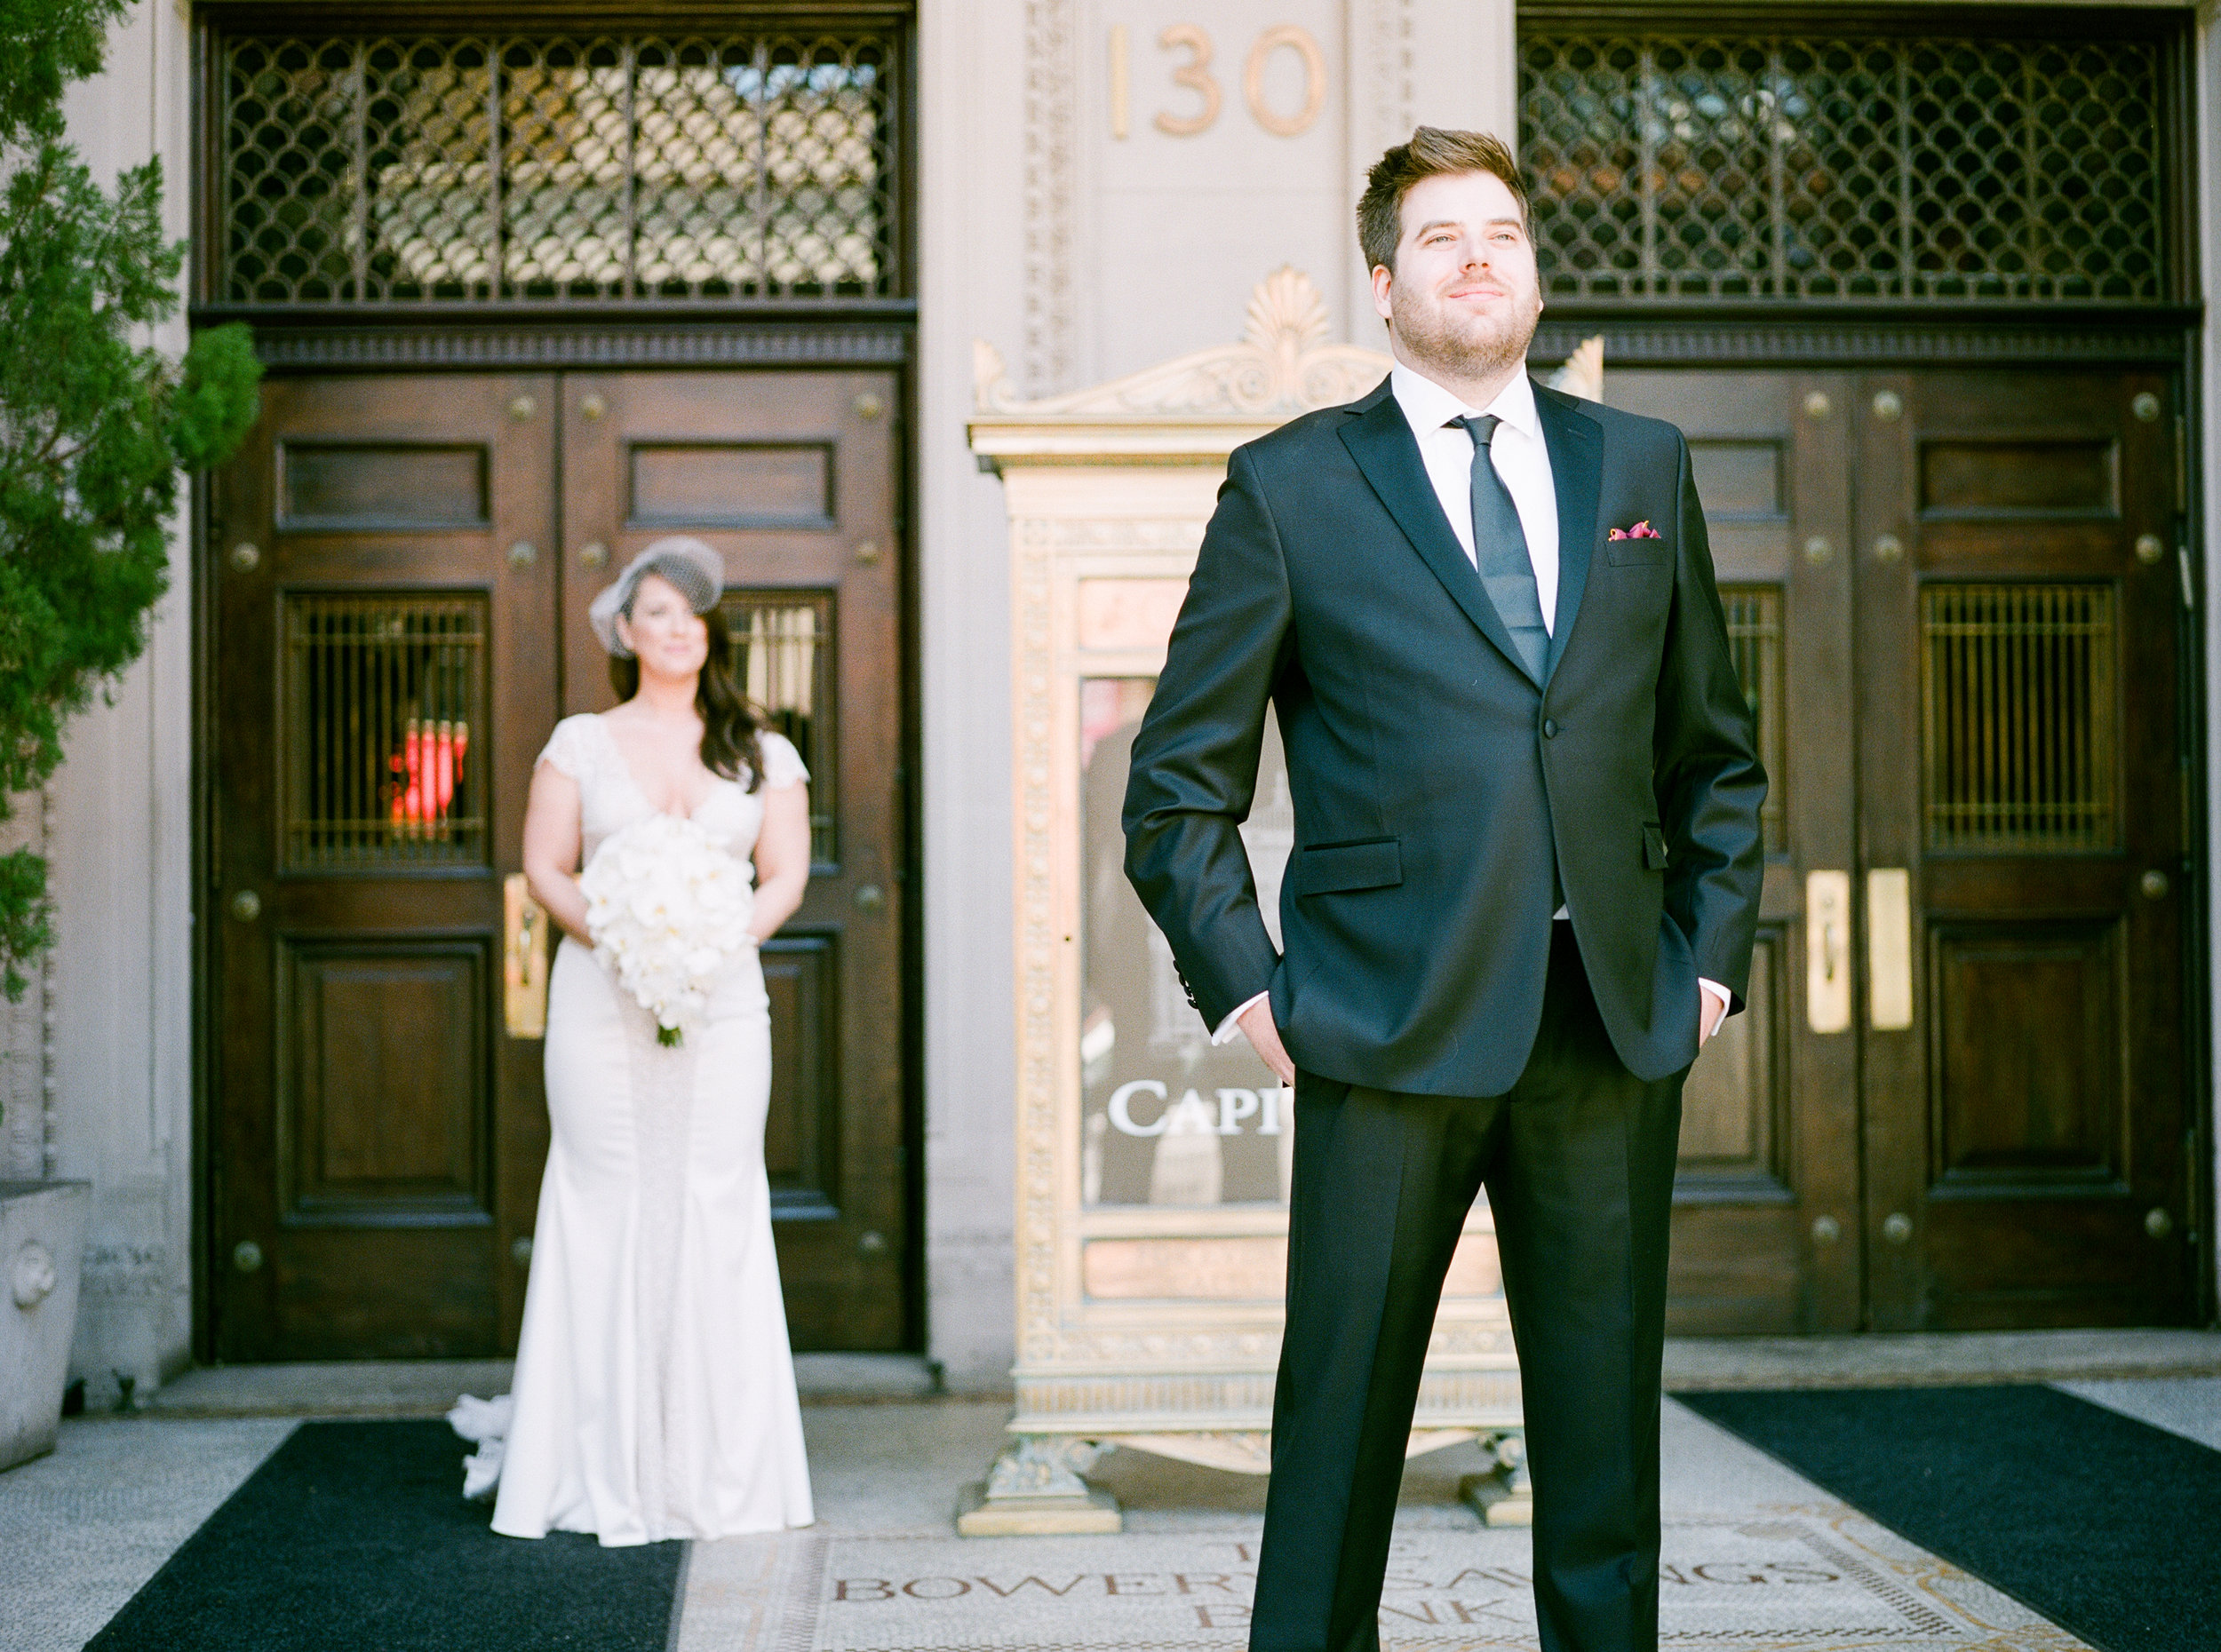 Claire+James_MediumFormat_Wedding_PRINT-4.jpg